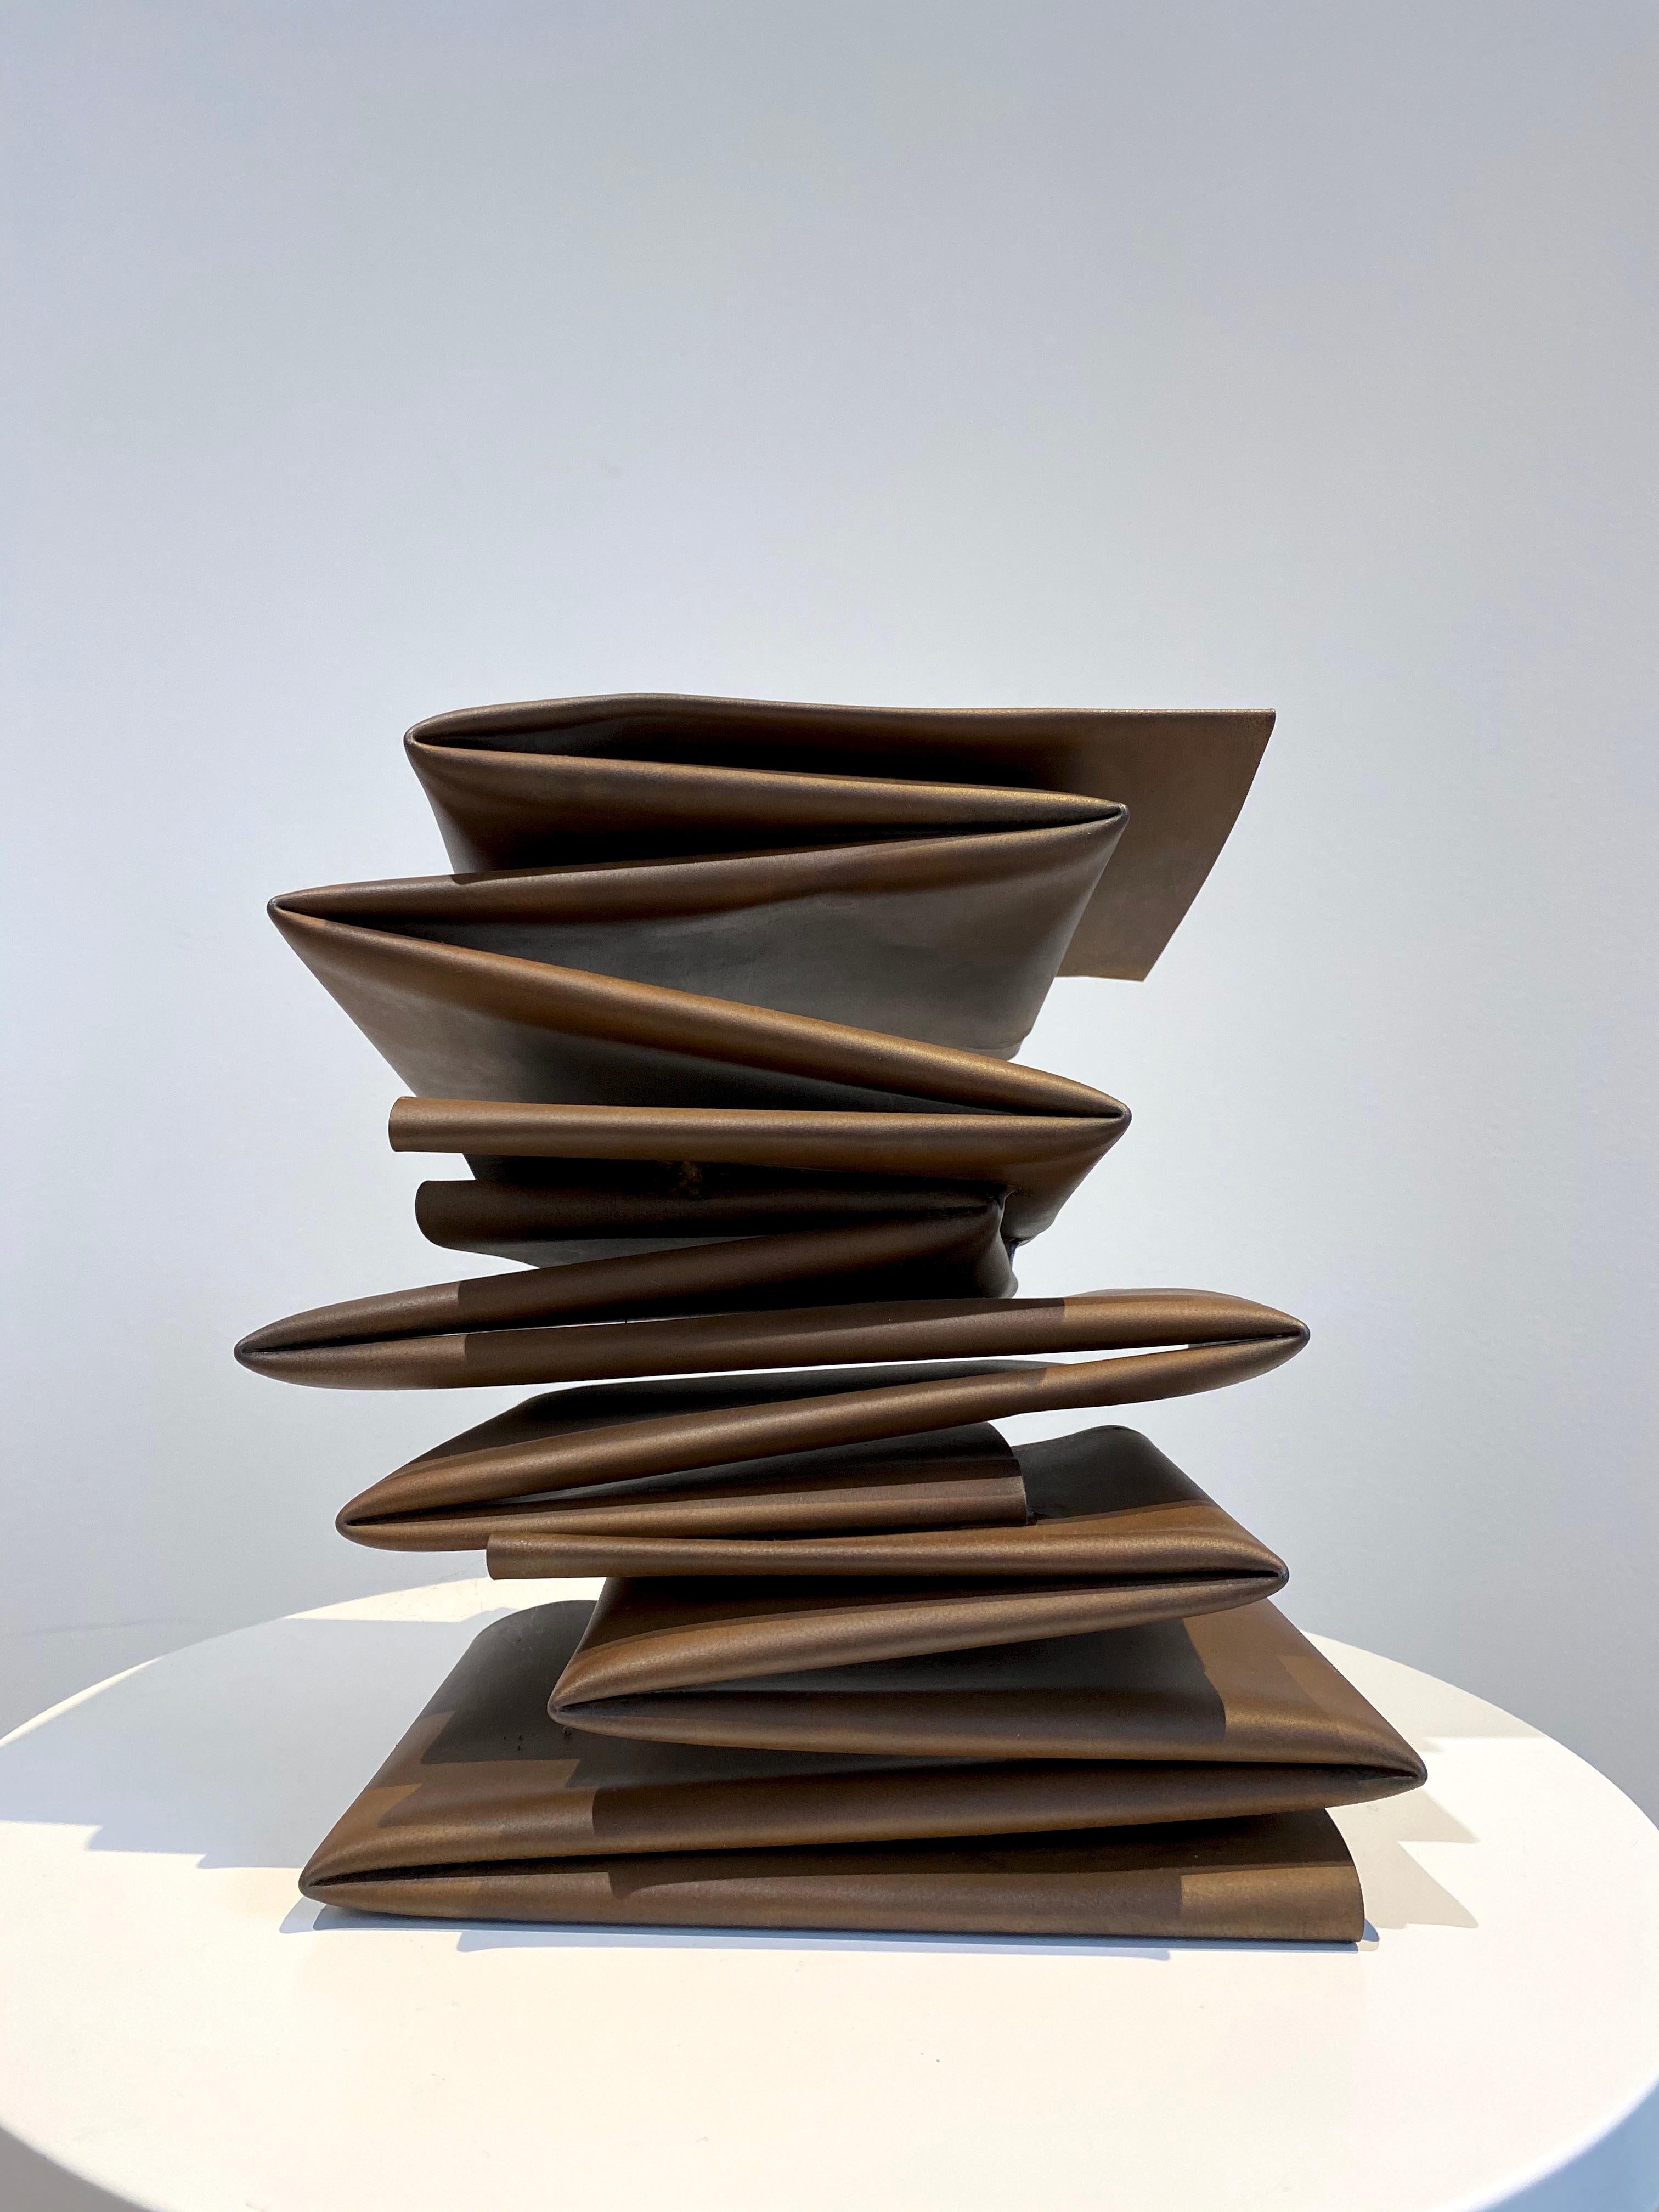 Etienne Viard Abstract Sculpture - Pliage, 2017, Corten steel, minimalist, abstract, sculpture